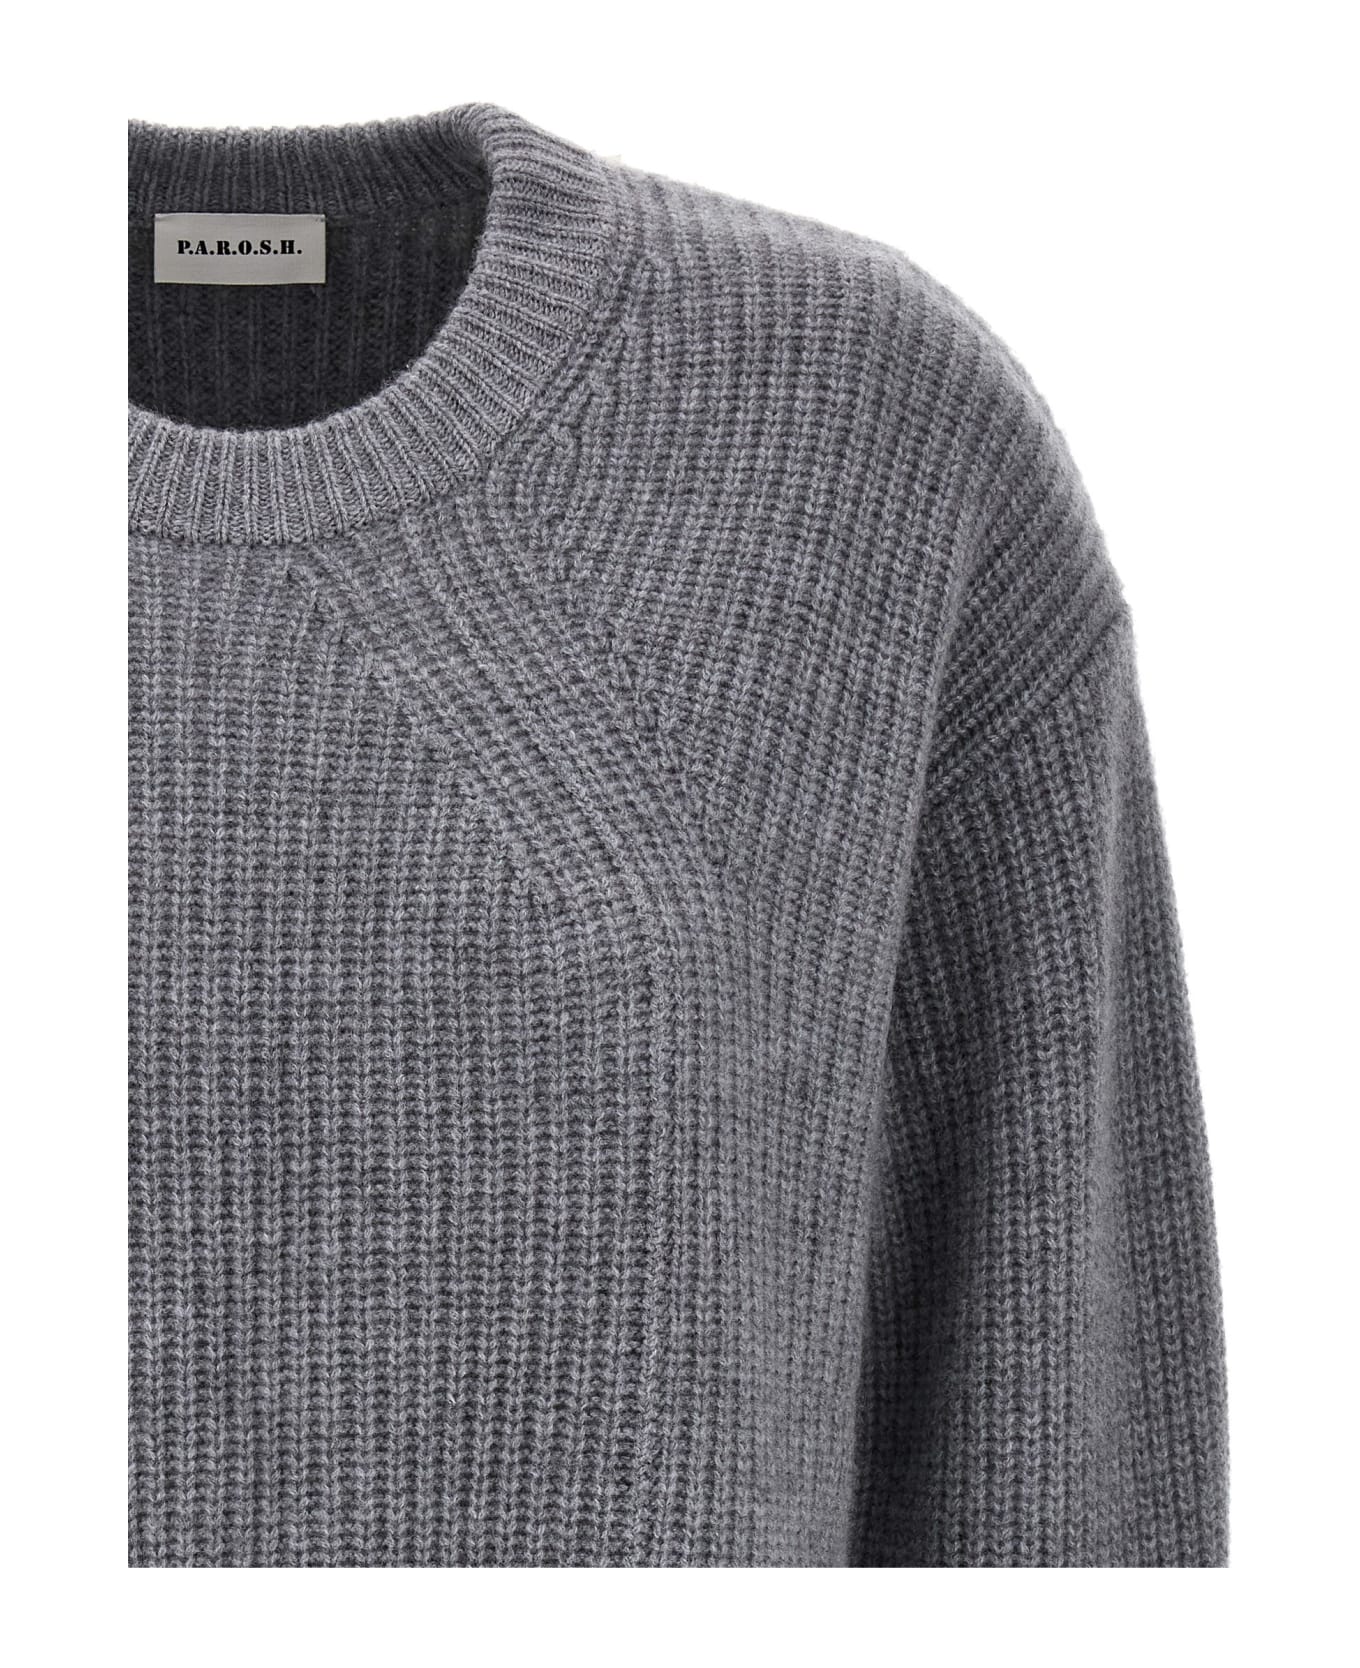 Parosh Cashmere Sweater - Gray ニットウェア